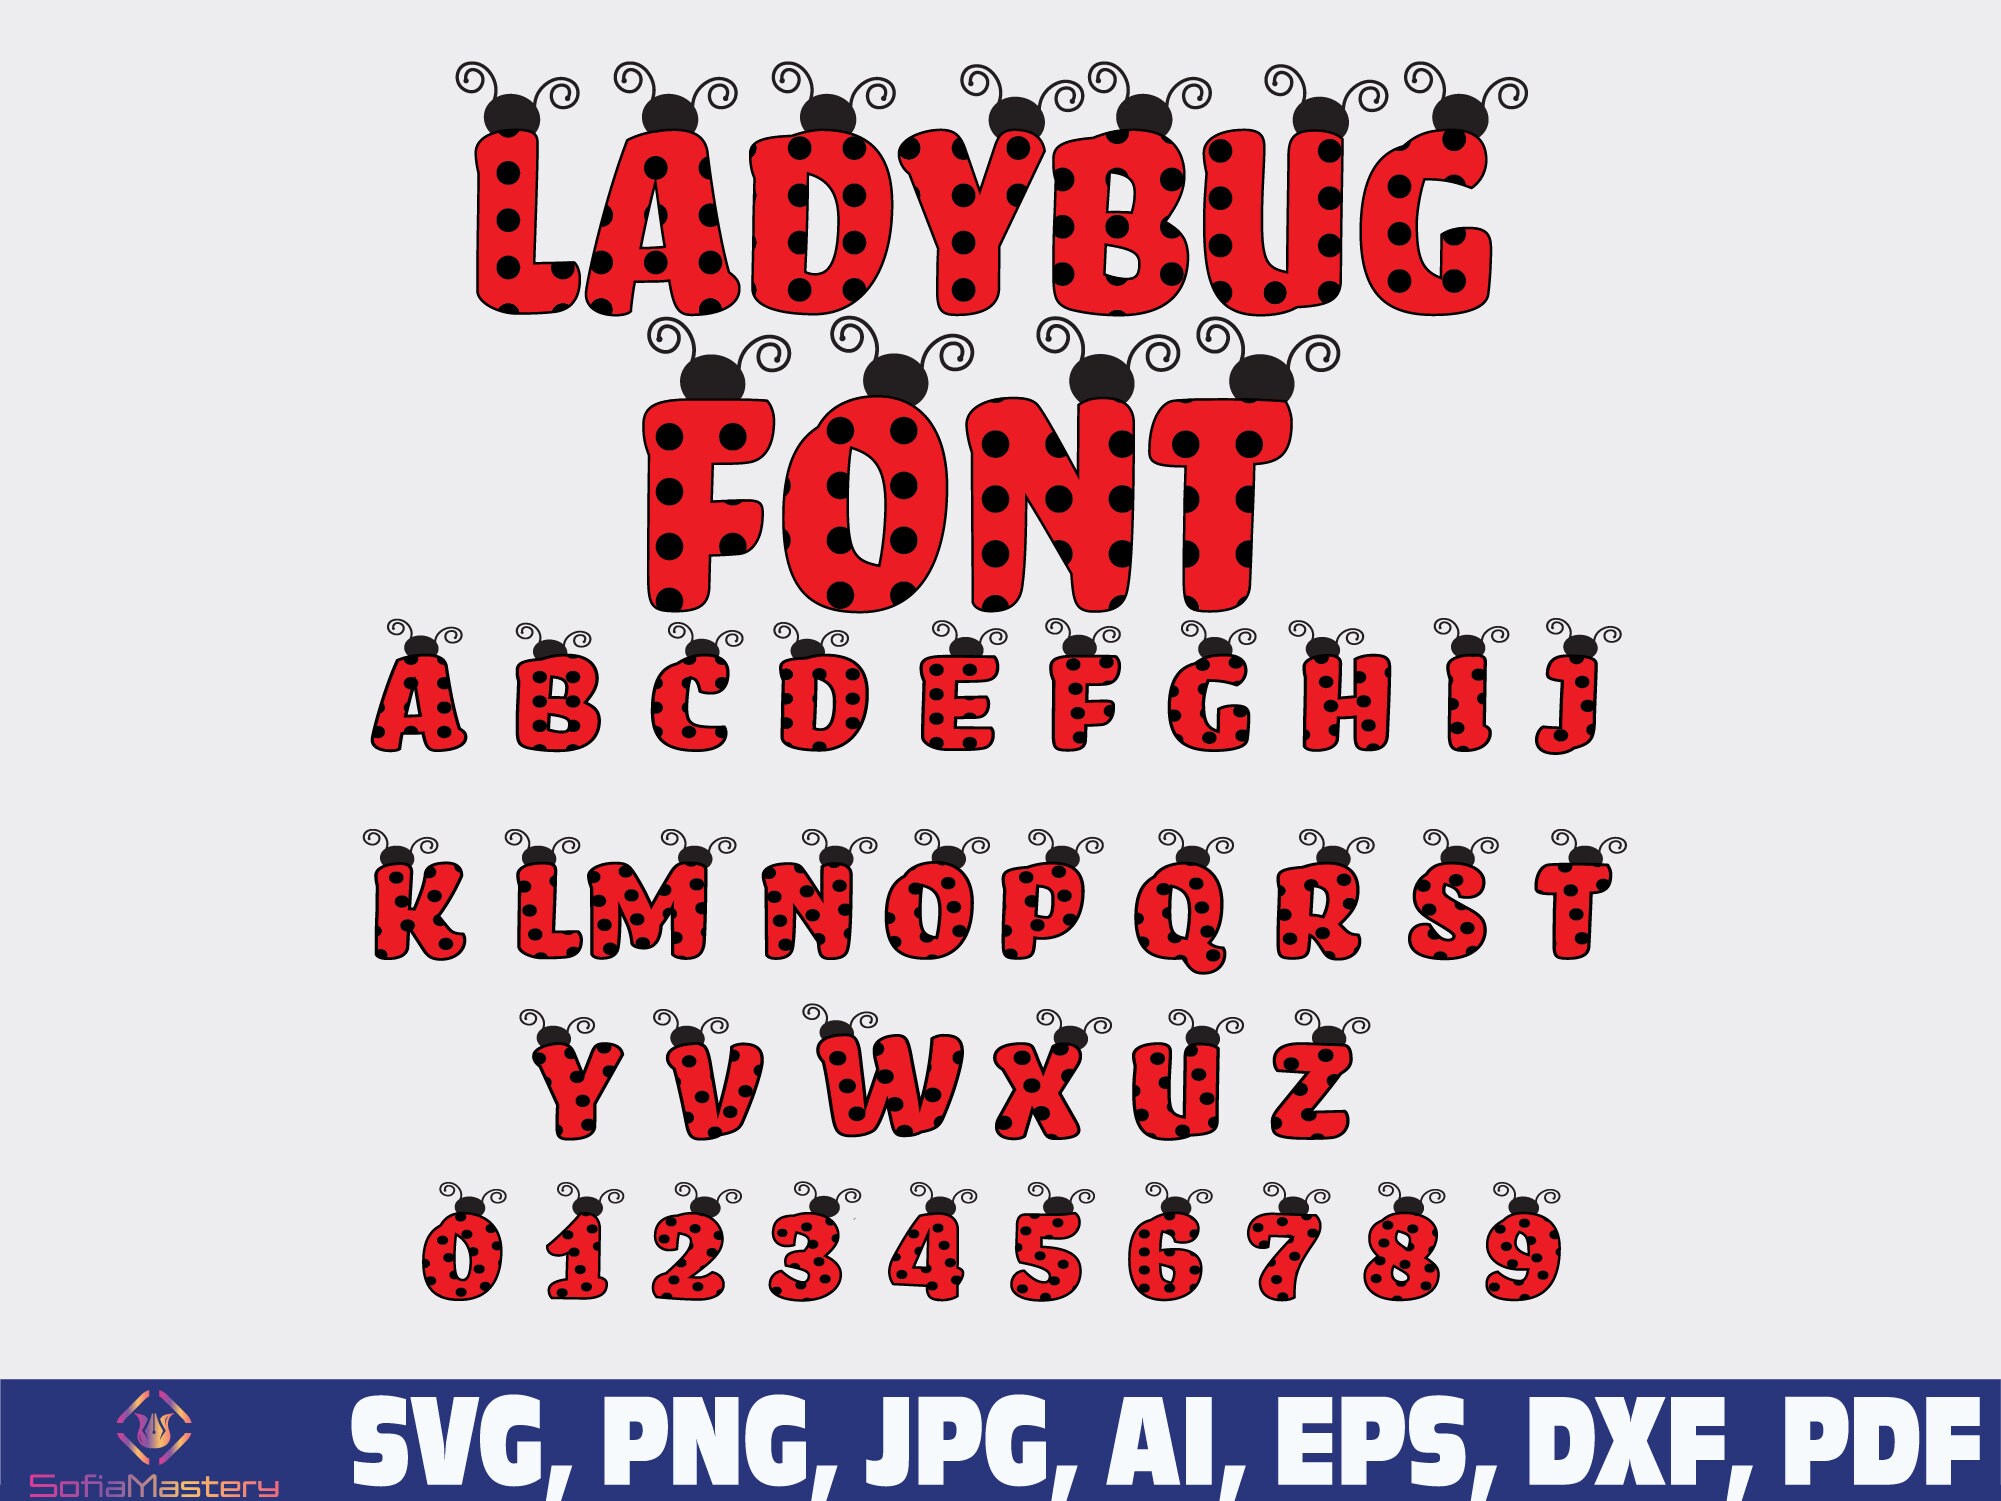 Miraculous Ladybug Font Generator - FREE Download - FontBolt